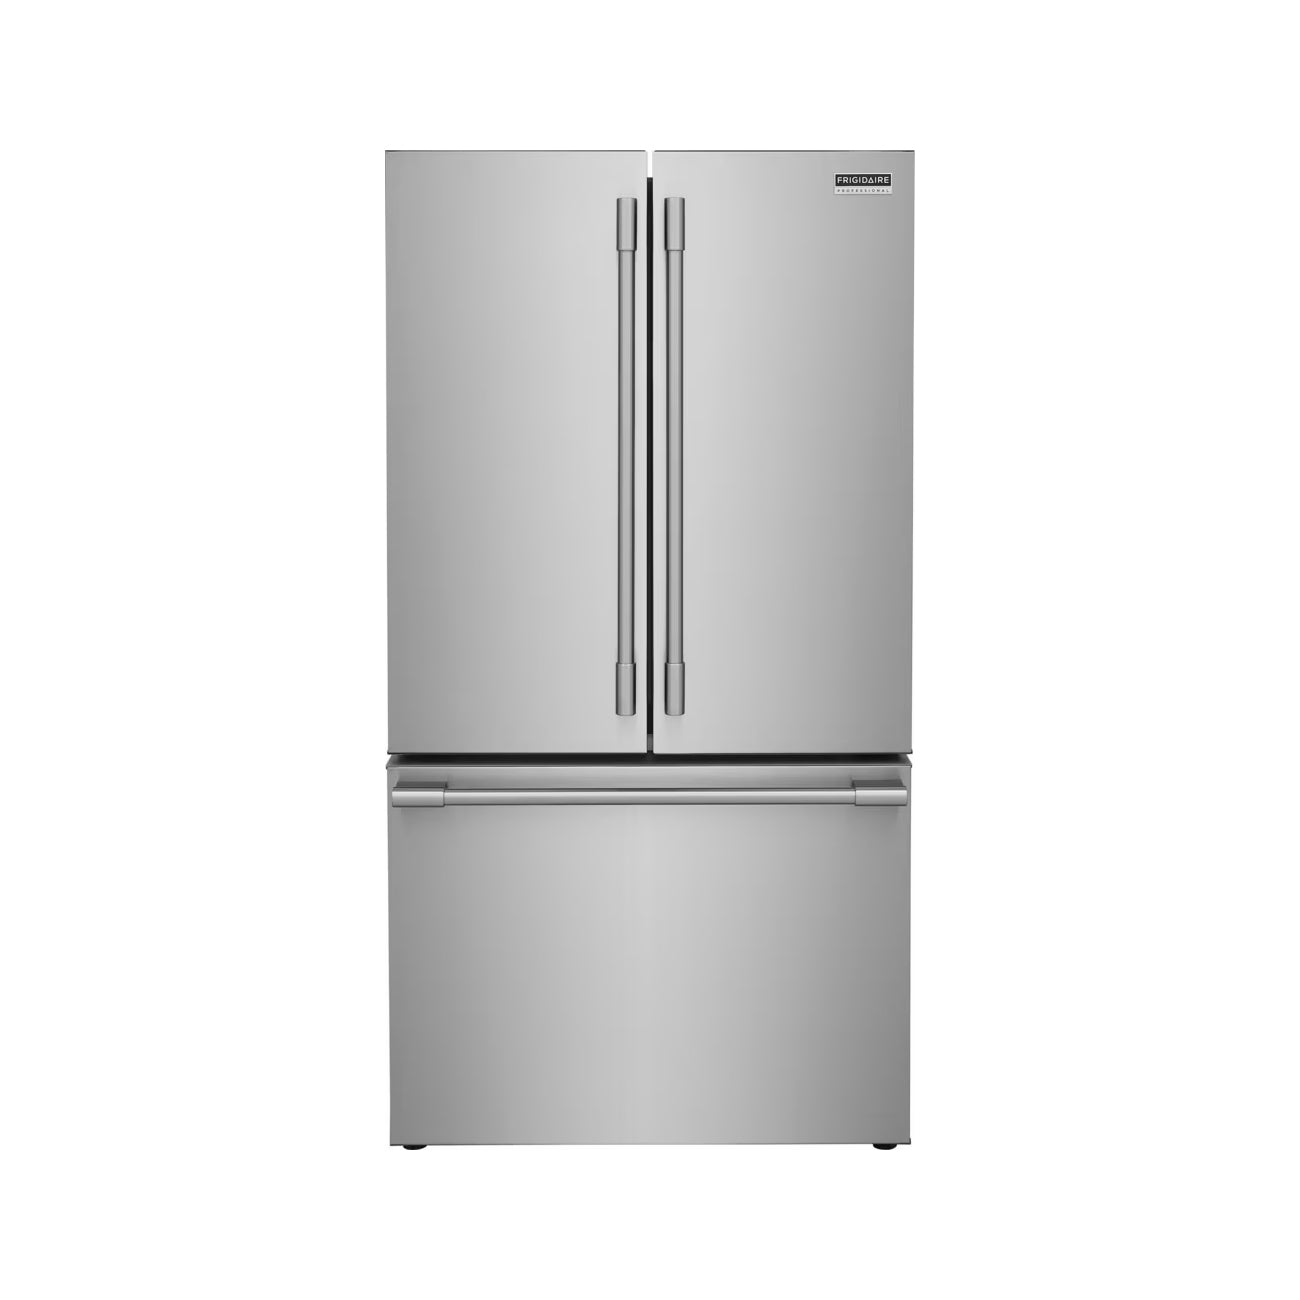 Frigidaire Professional 23.3 Cu. Ft. French Door Counter-Depth Refrigerator